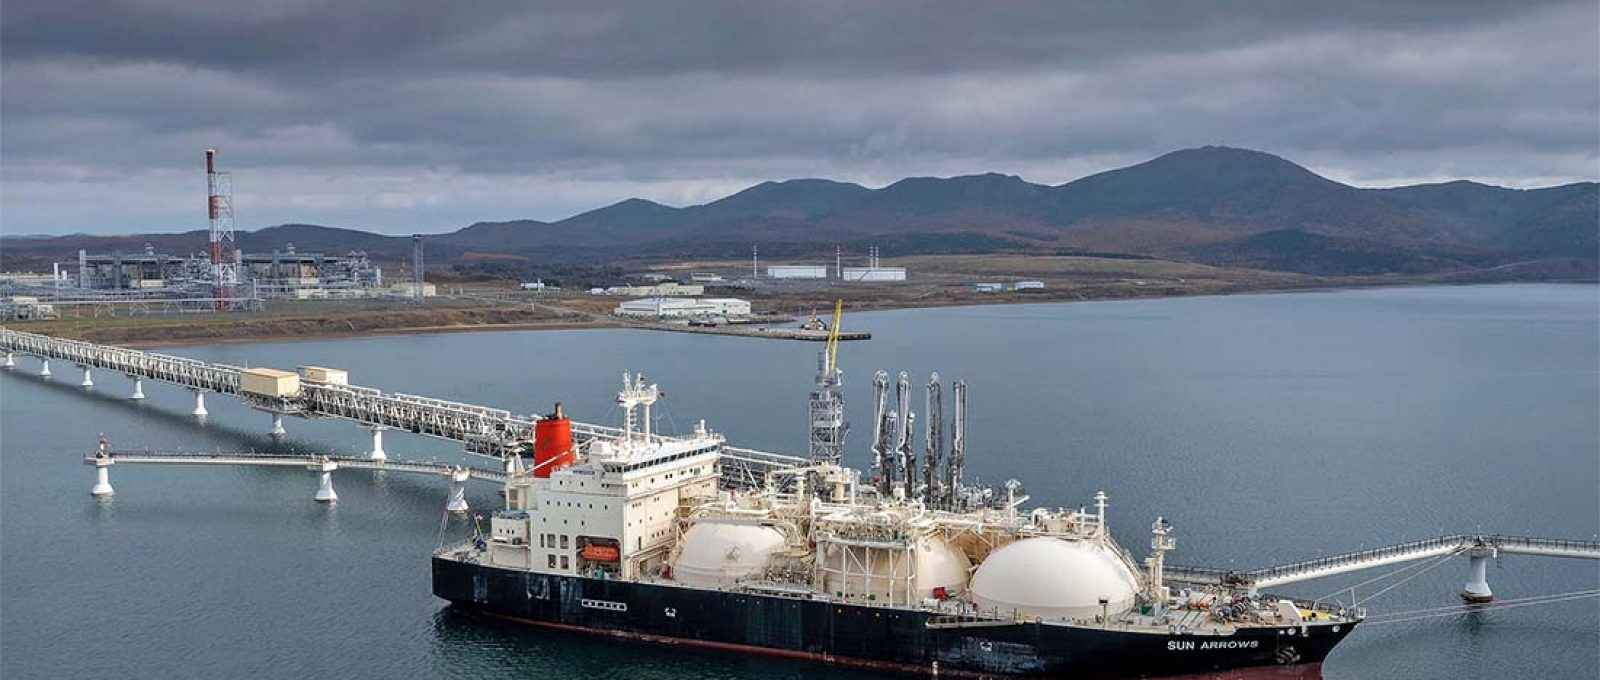 Navio-tanque recebe carga de gás natural do projeto Sacalina-2 no porto de Prigorodnoye, Rússia (AP).